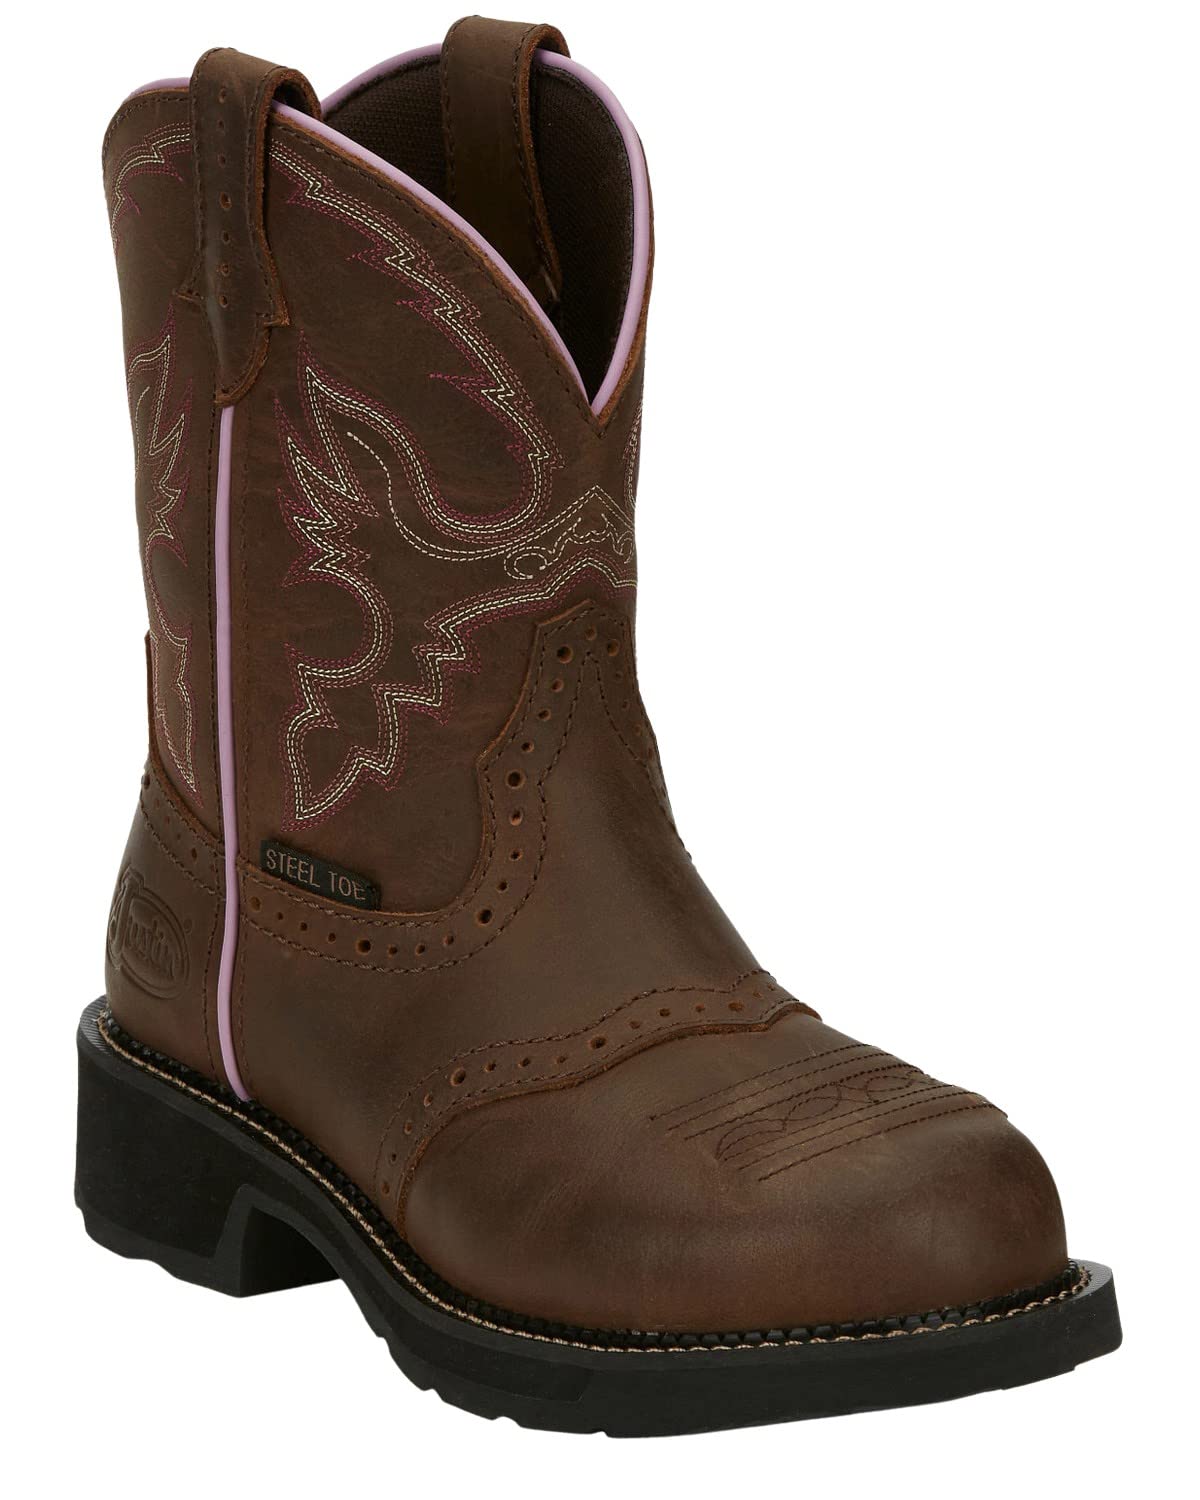 Justin Women's Wanette Western Work Boot Steel Toe Distressed Brown 7.5 M US